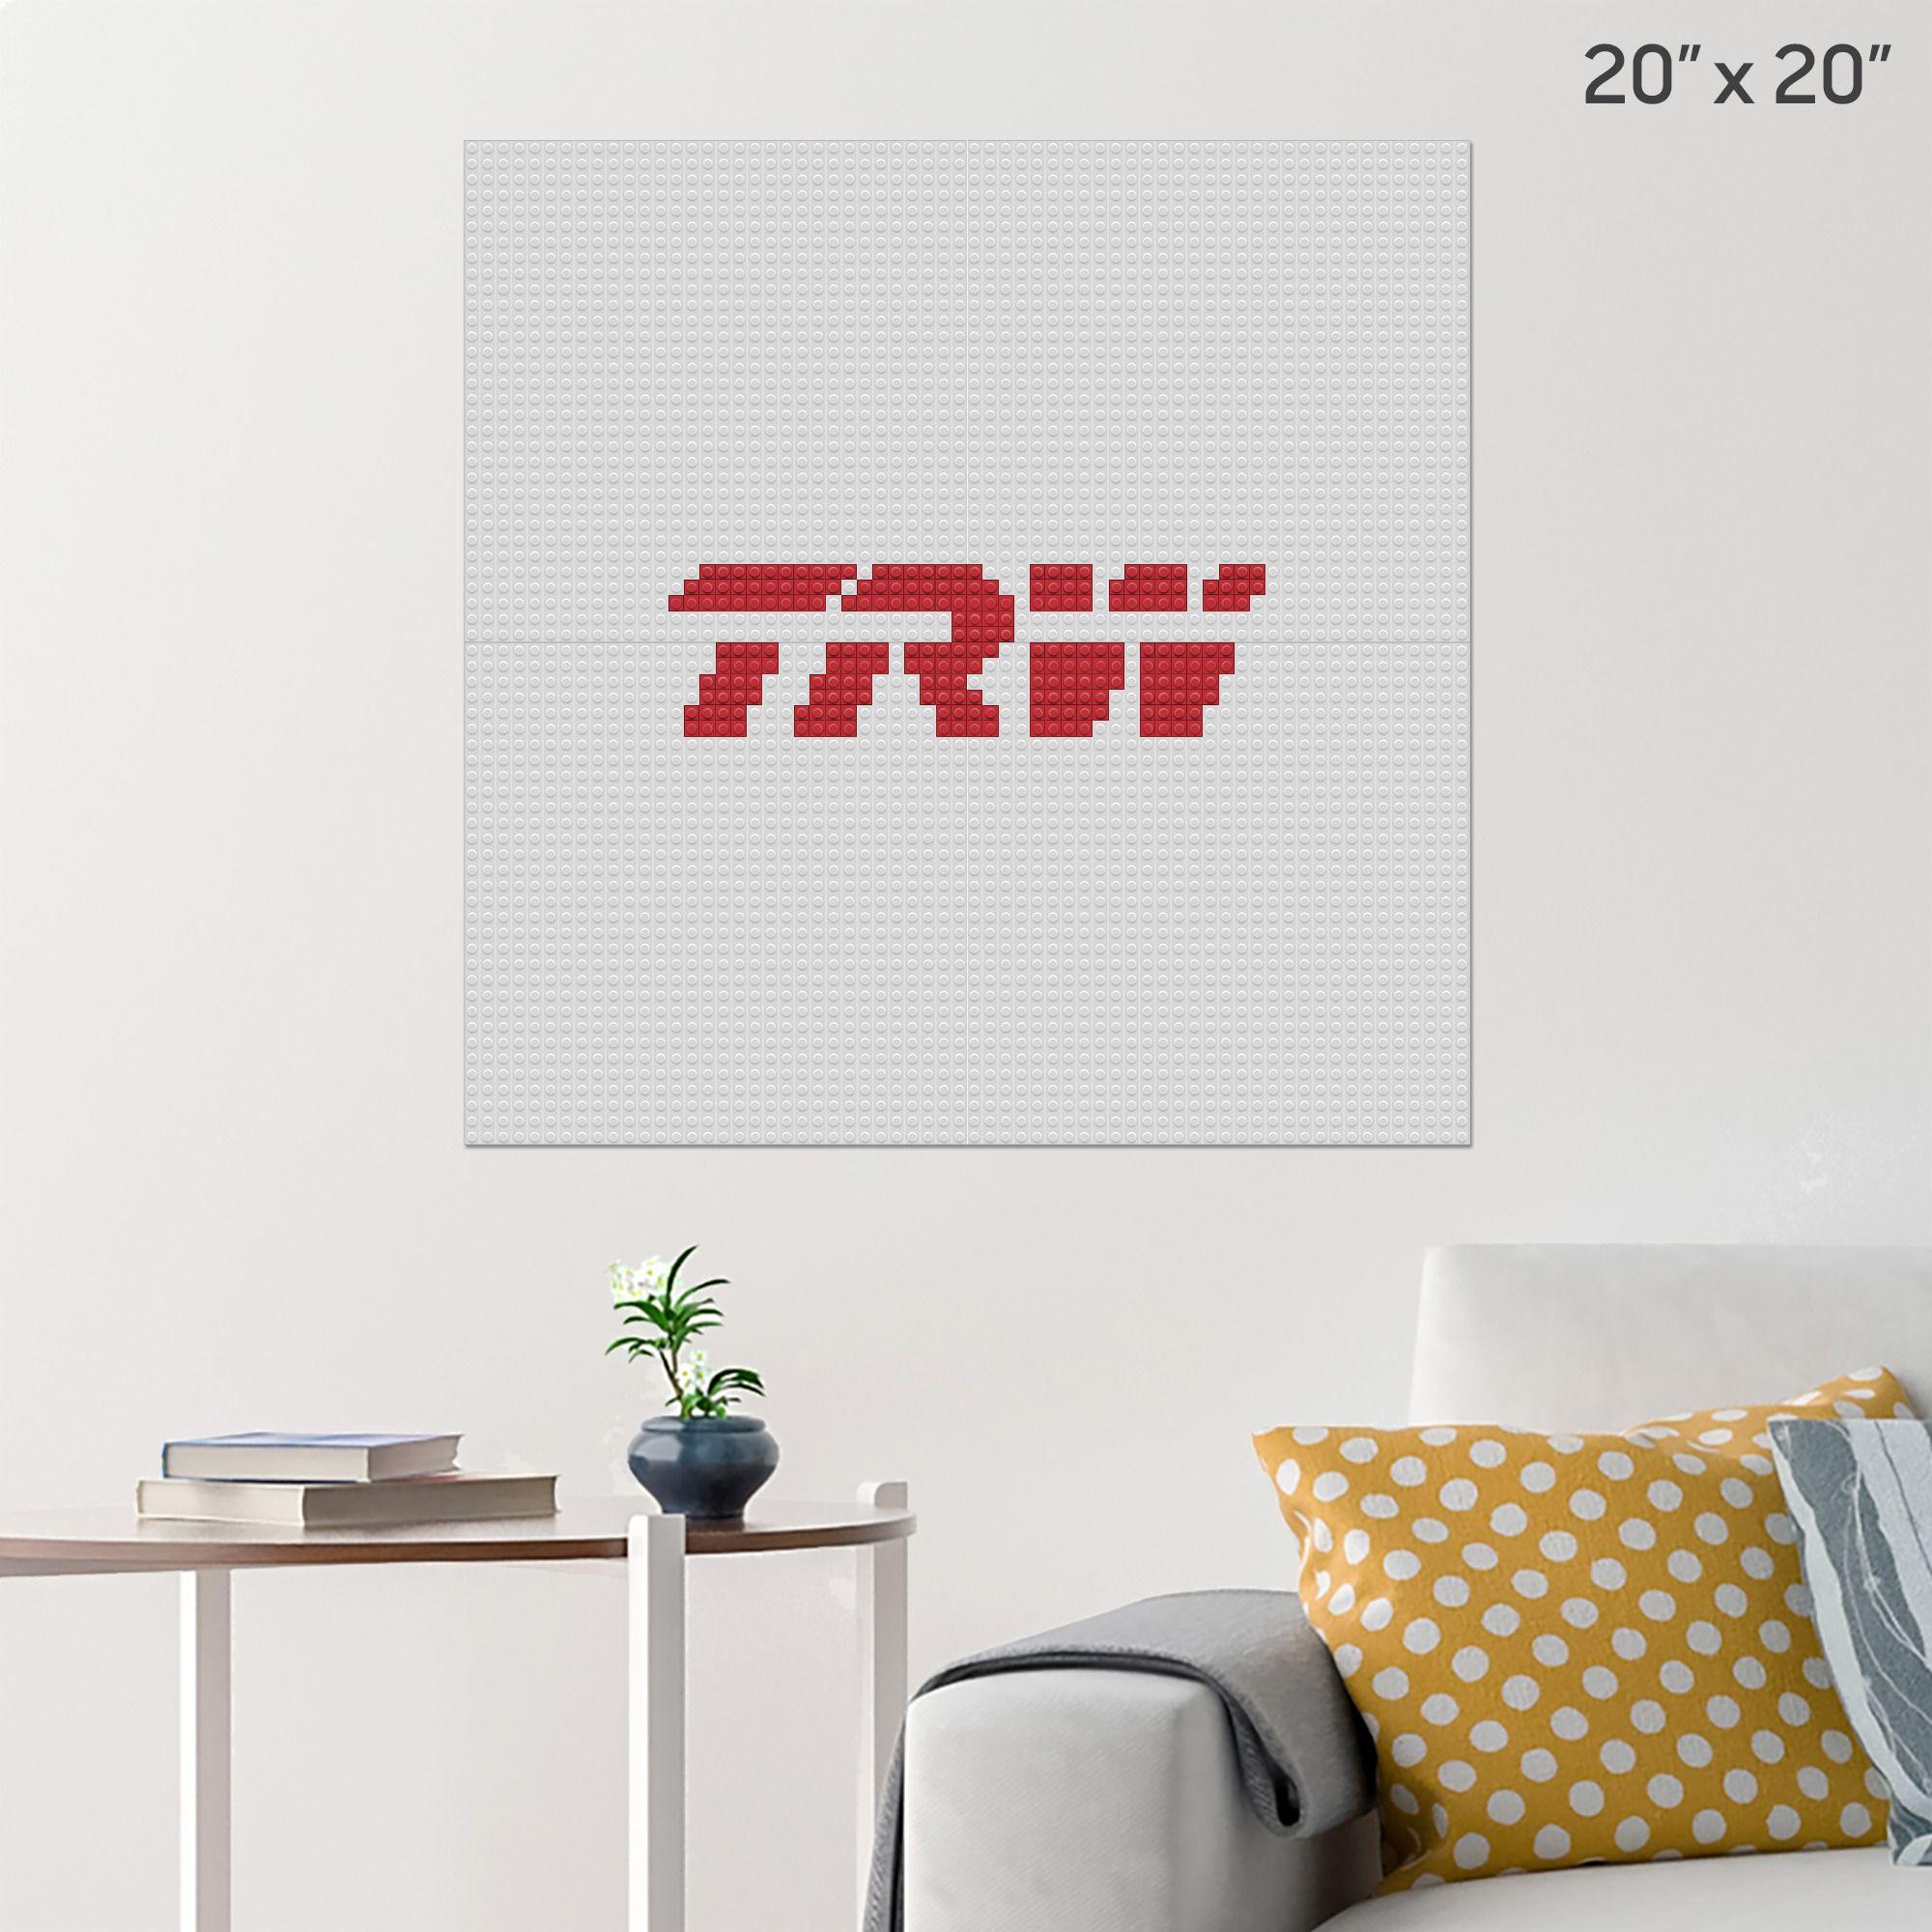 TRW Logo - TRW Automotive Holdings Corp. Logo Wall ...